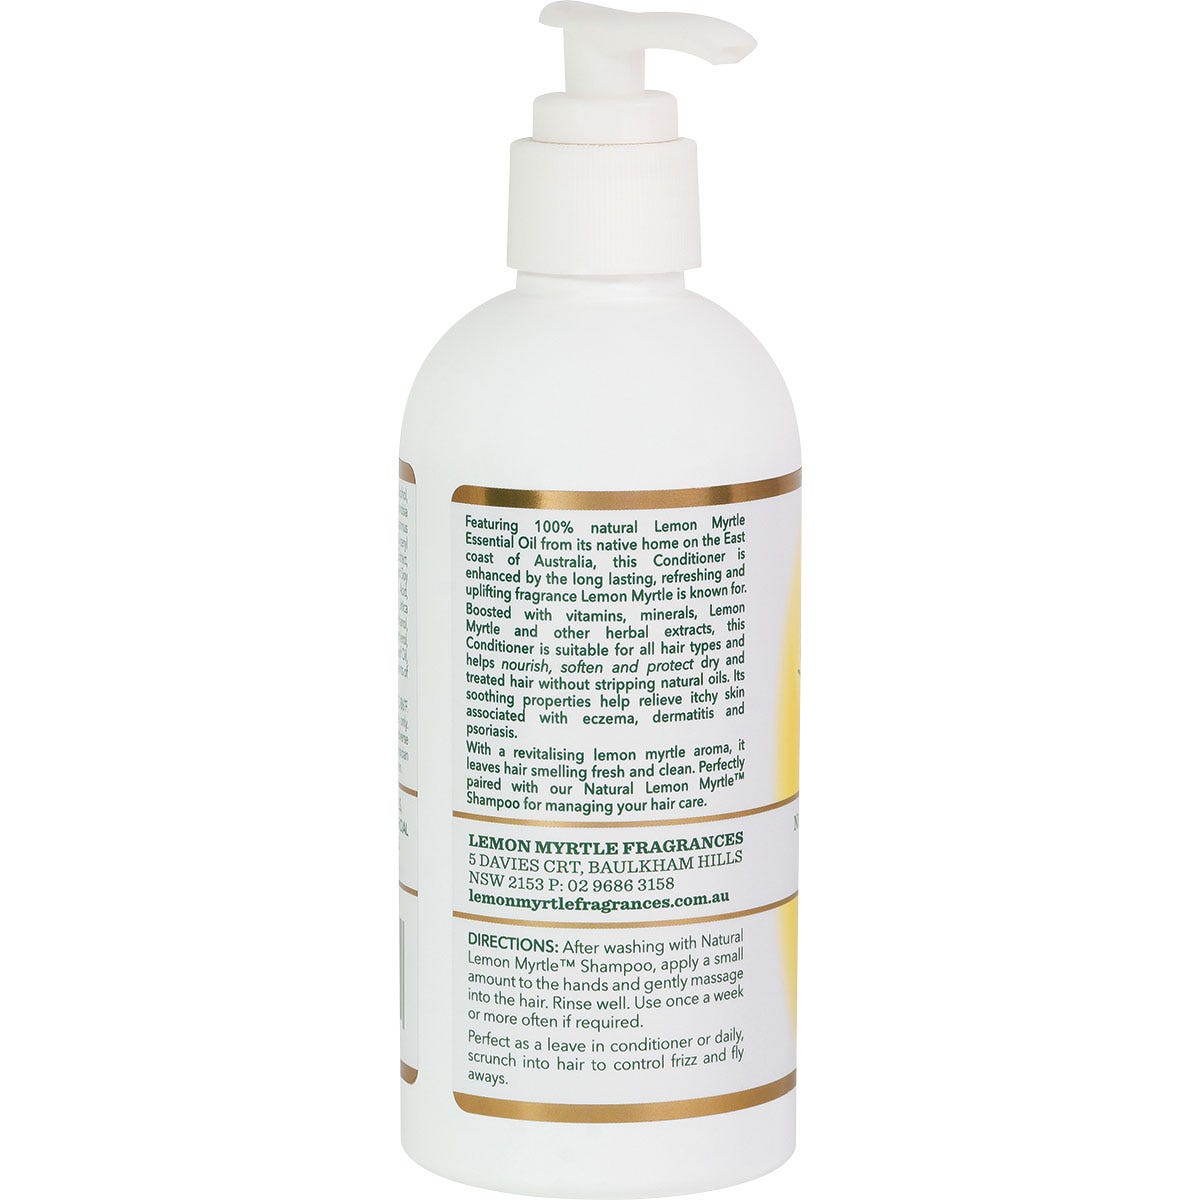 Lemon Myrtle Fragrances Conditioner 250ml - Dr Earth - Hair Care